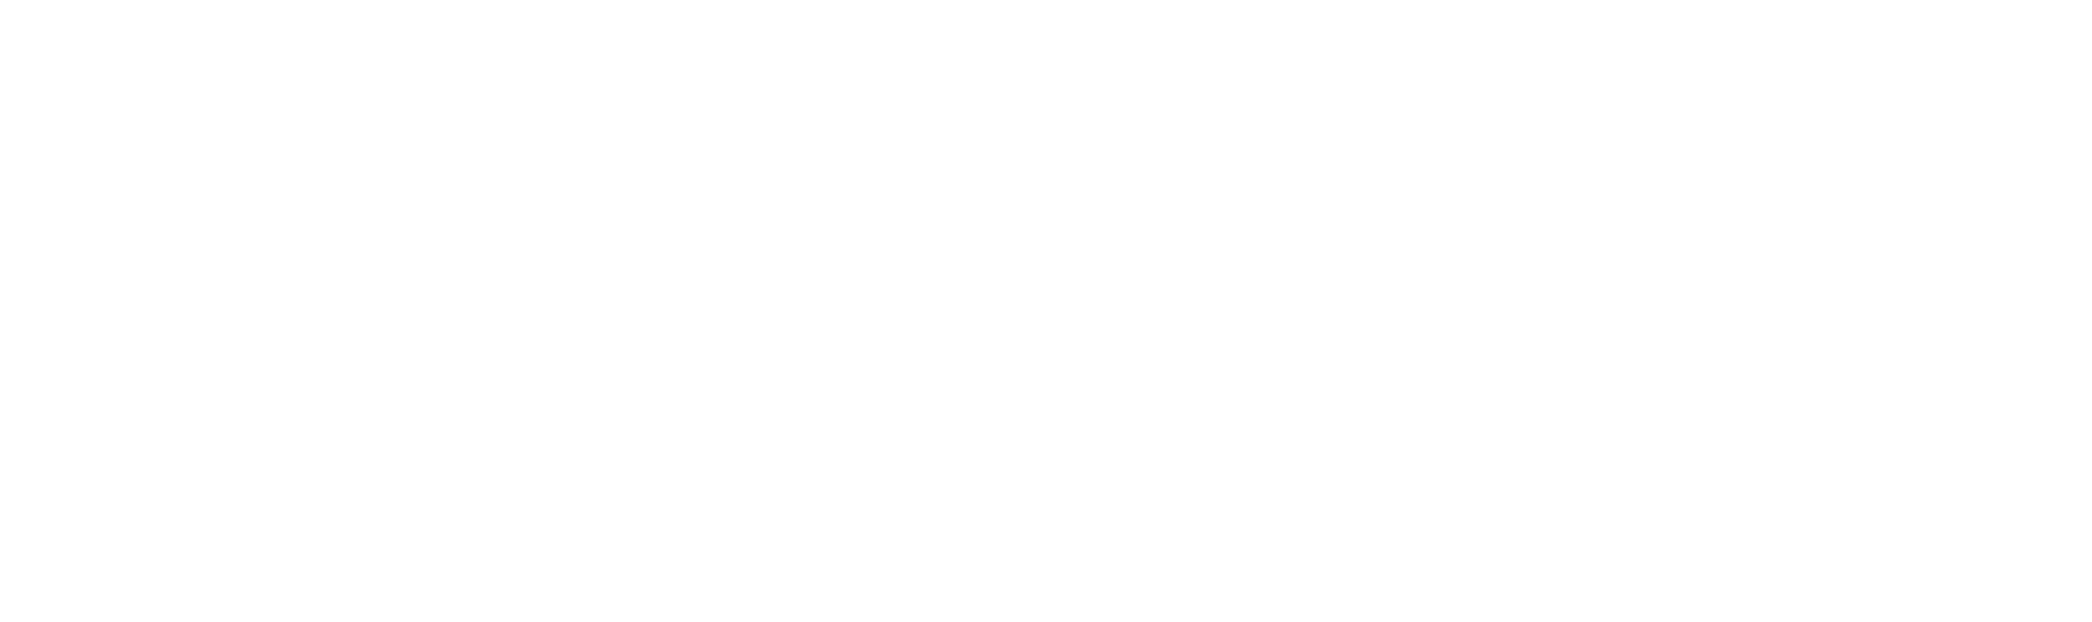 Logo Rach